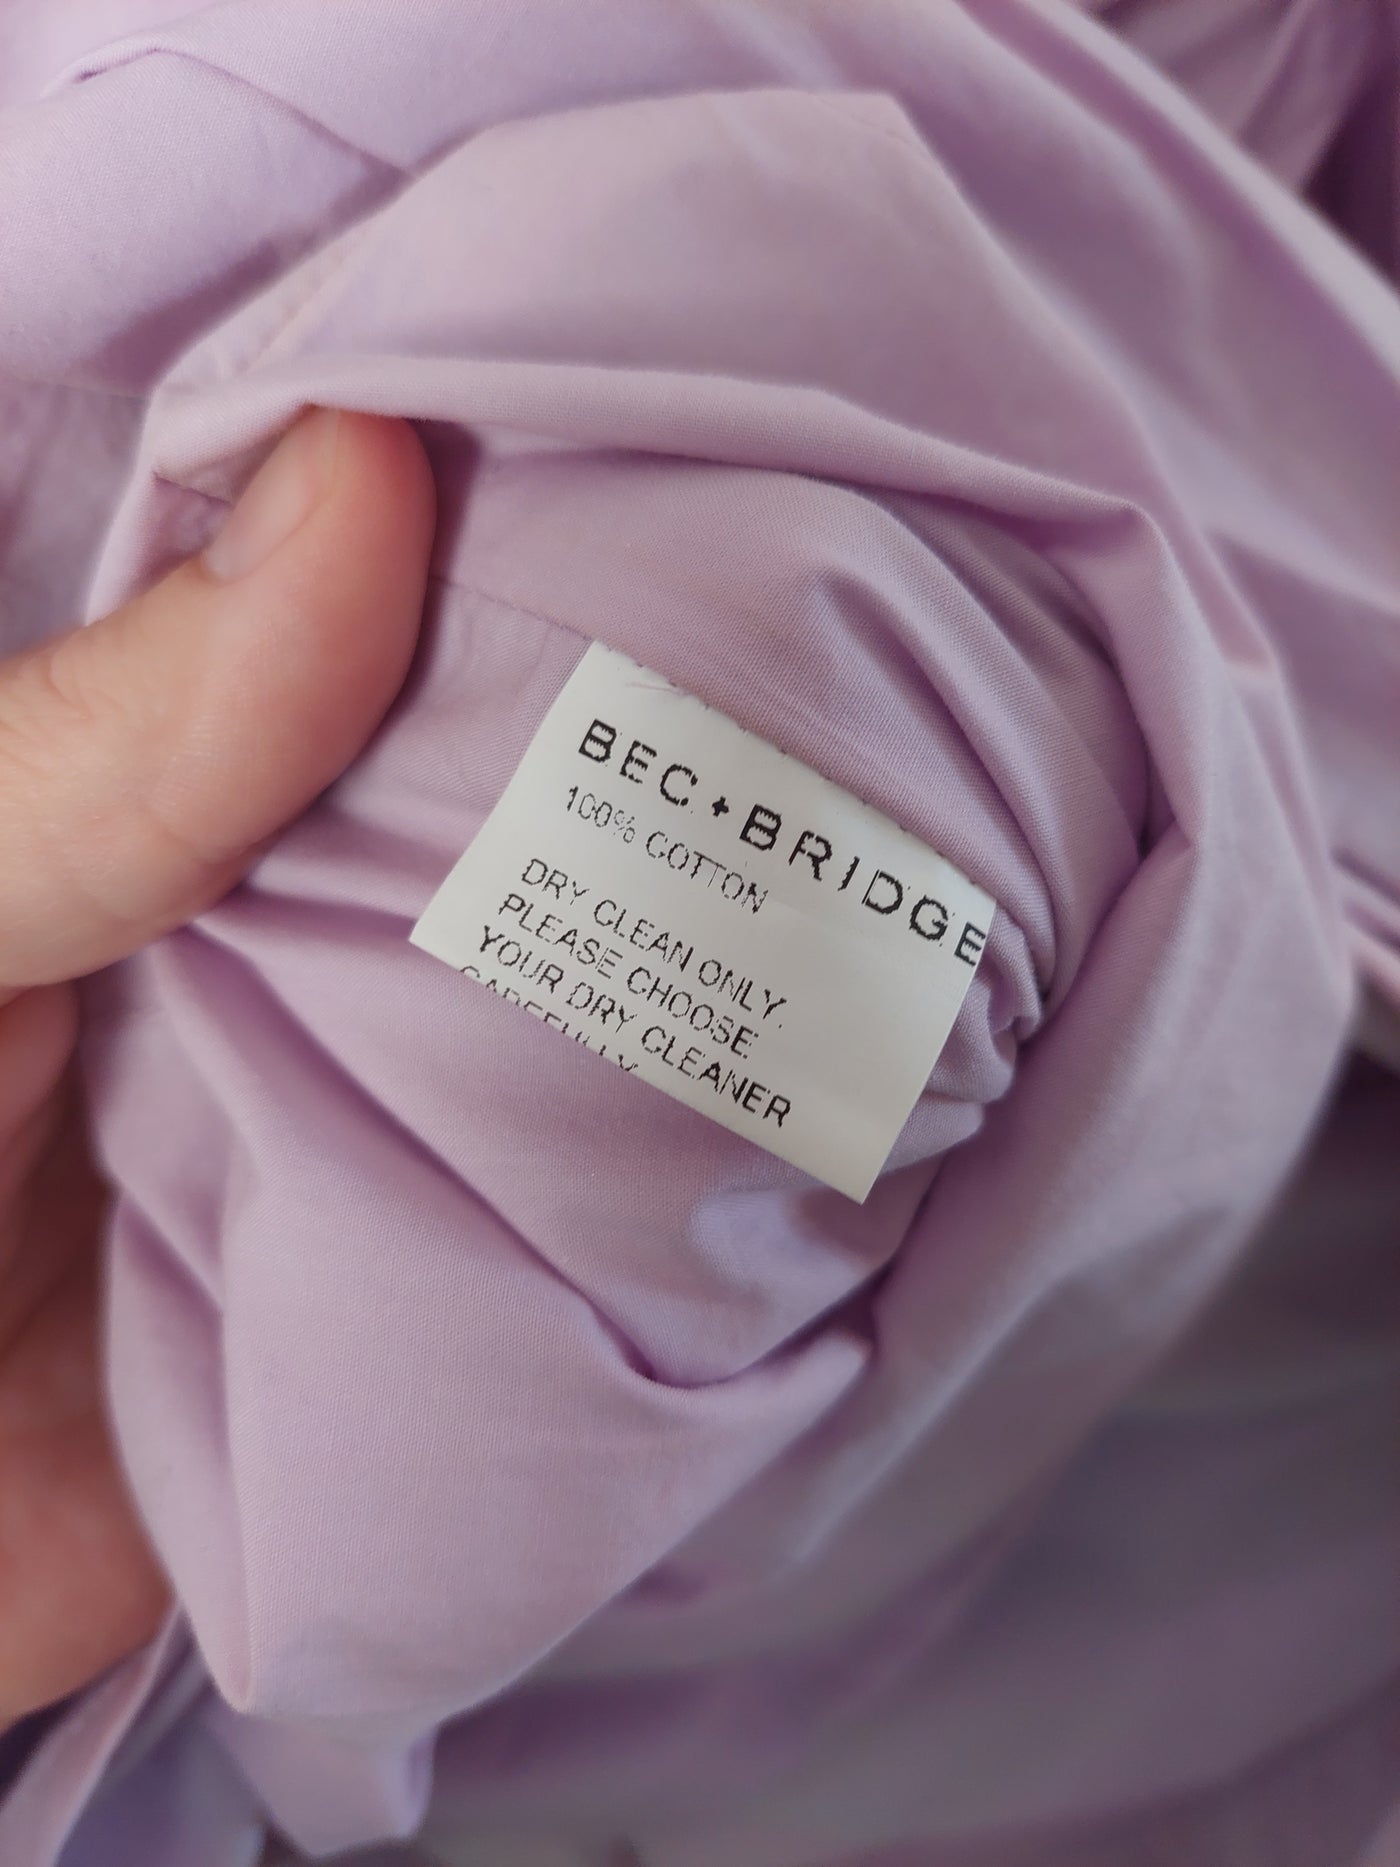 Bec & Bridge Winslowe Ruched Long Sleeve Mini Dress in Lilac, Size 12